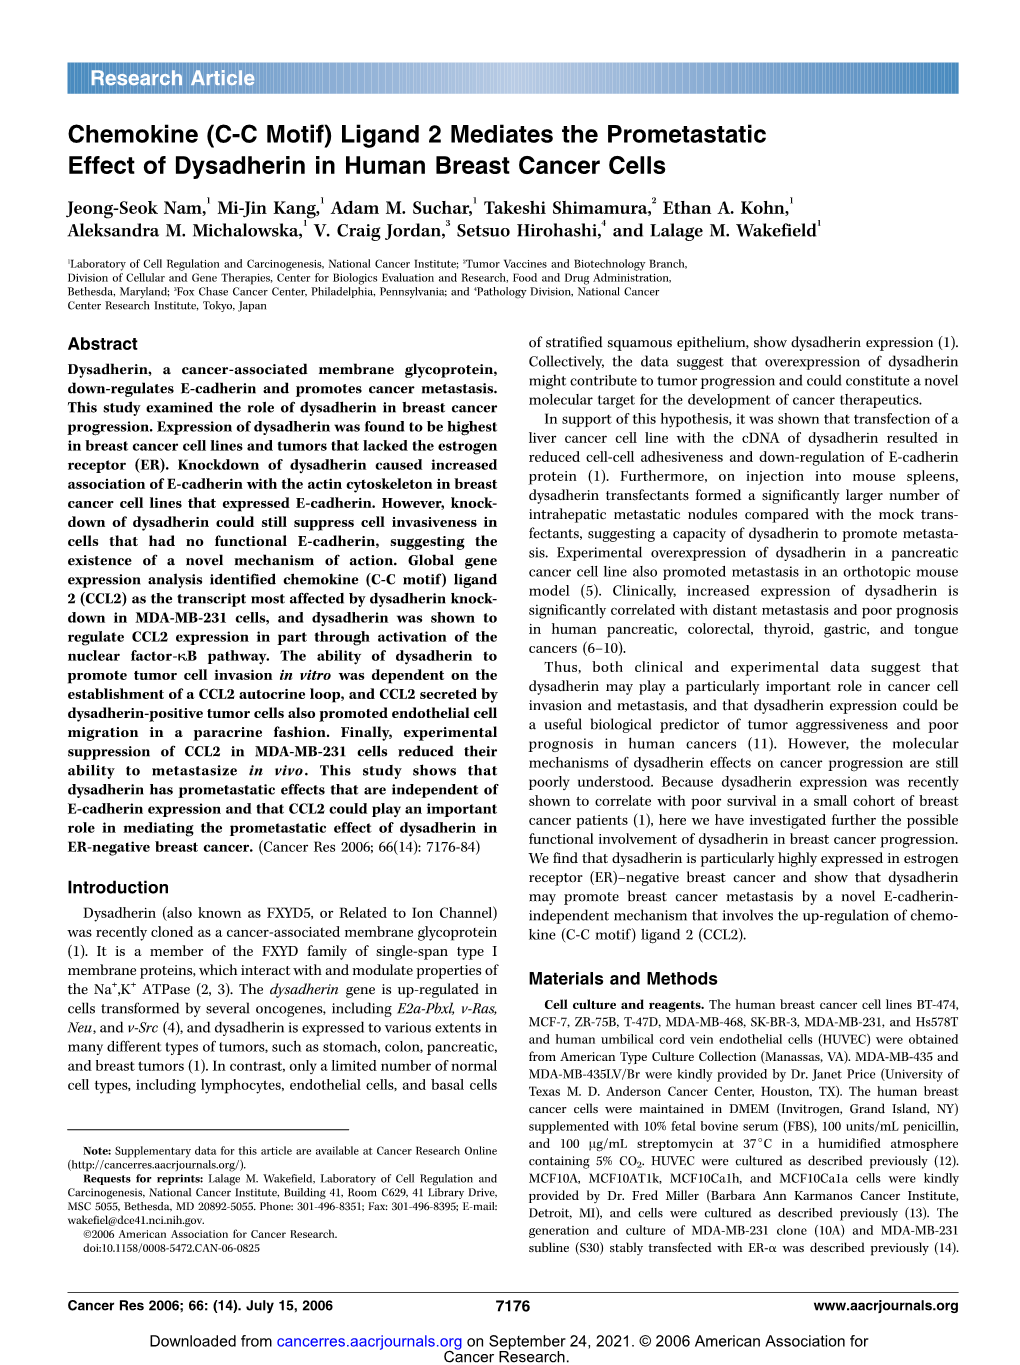 (CC Motif) Ligand 2 Mediates the Prometastatic Effect of Dysadherin